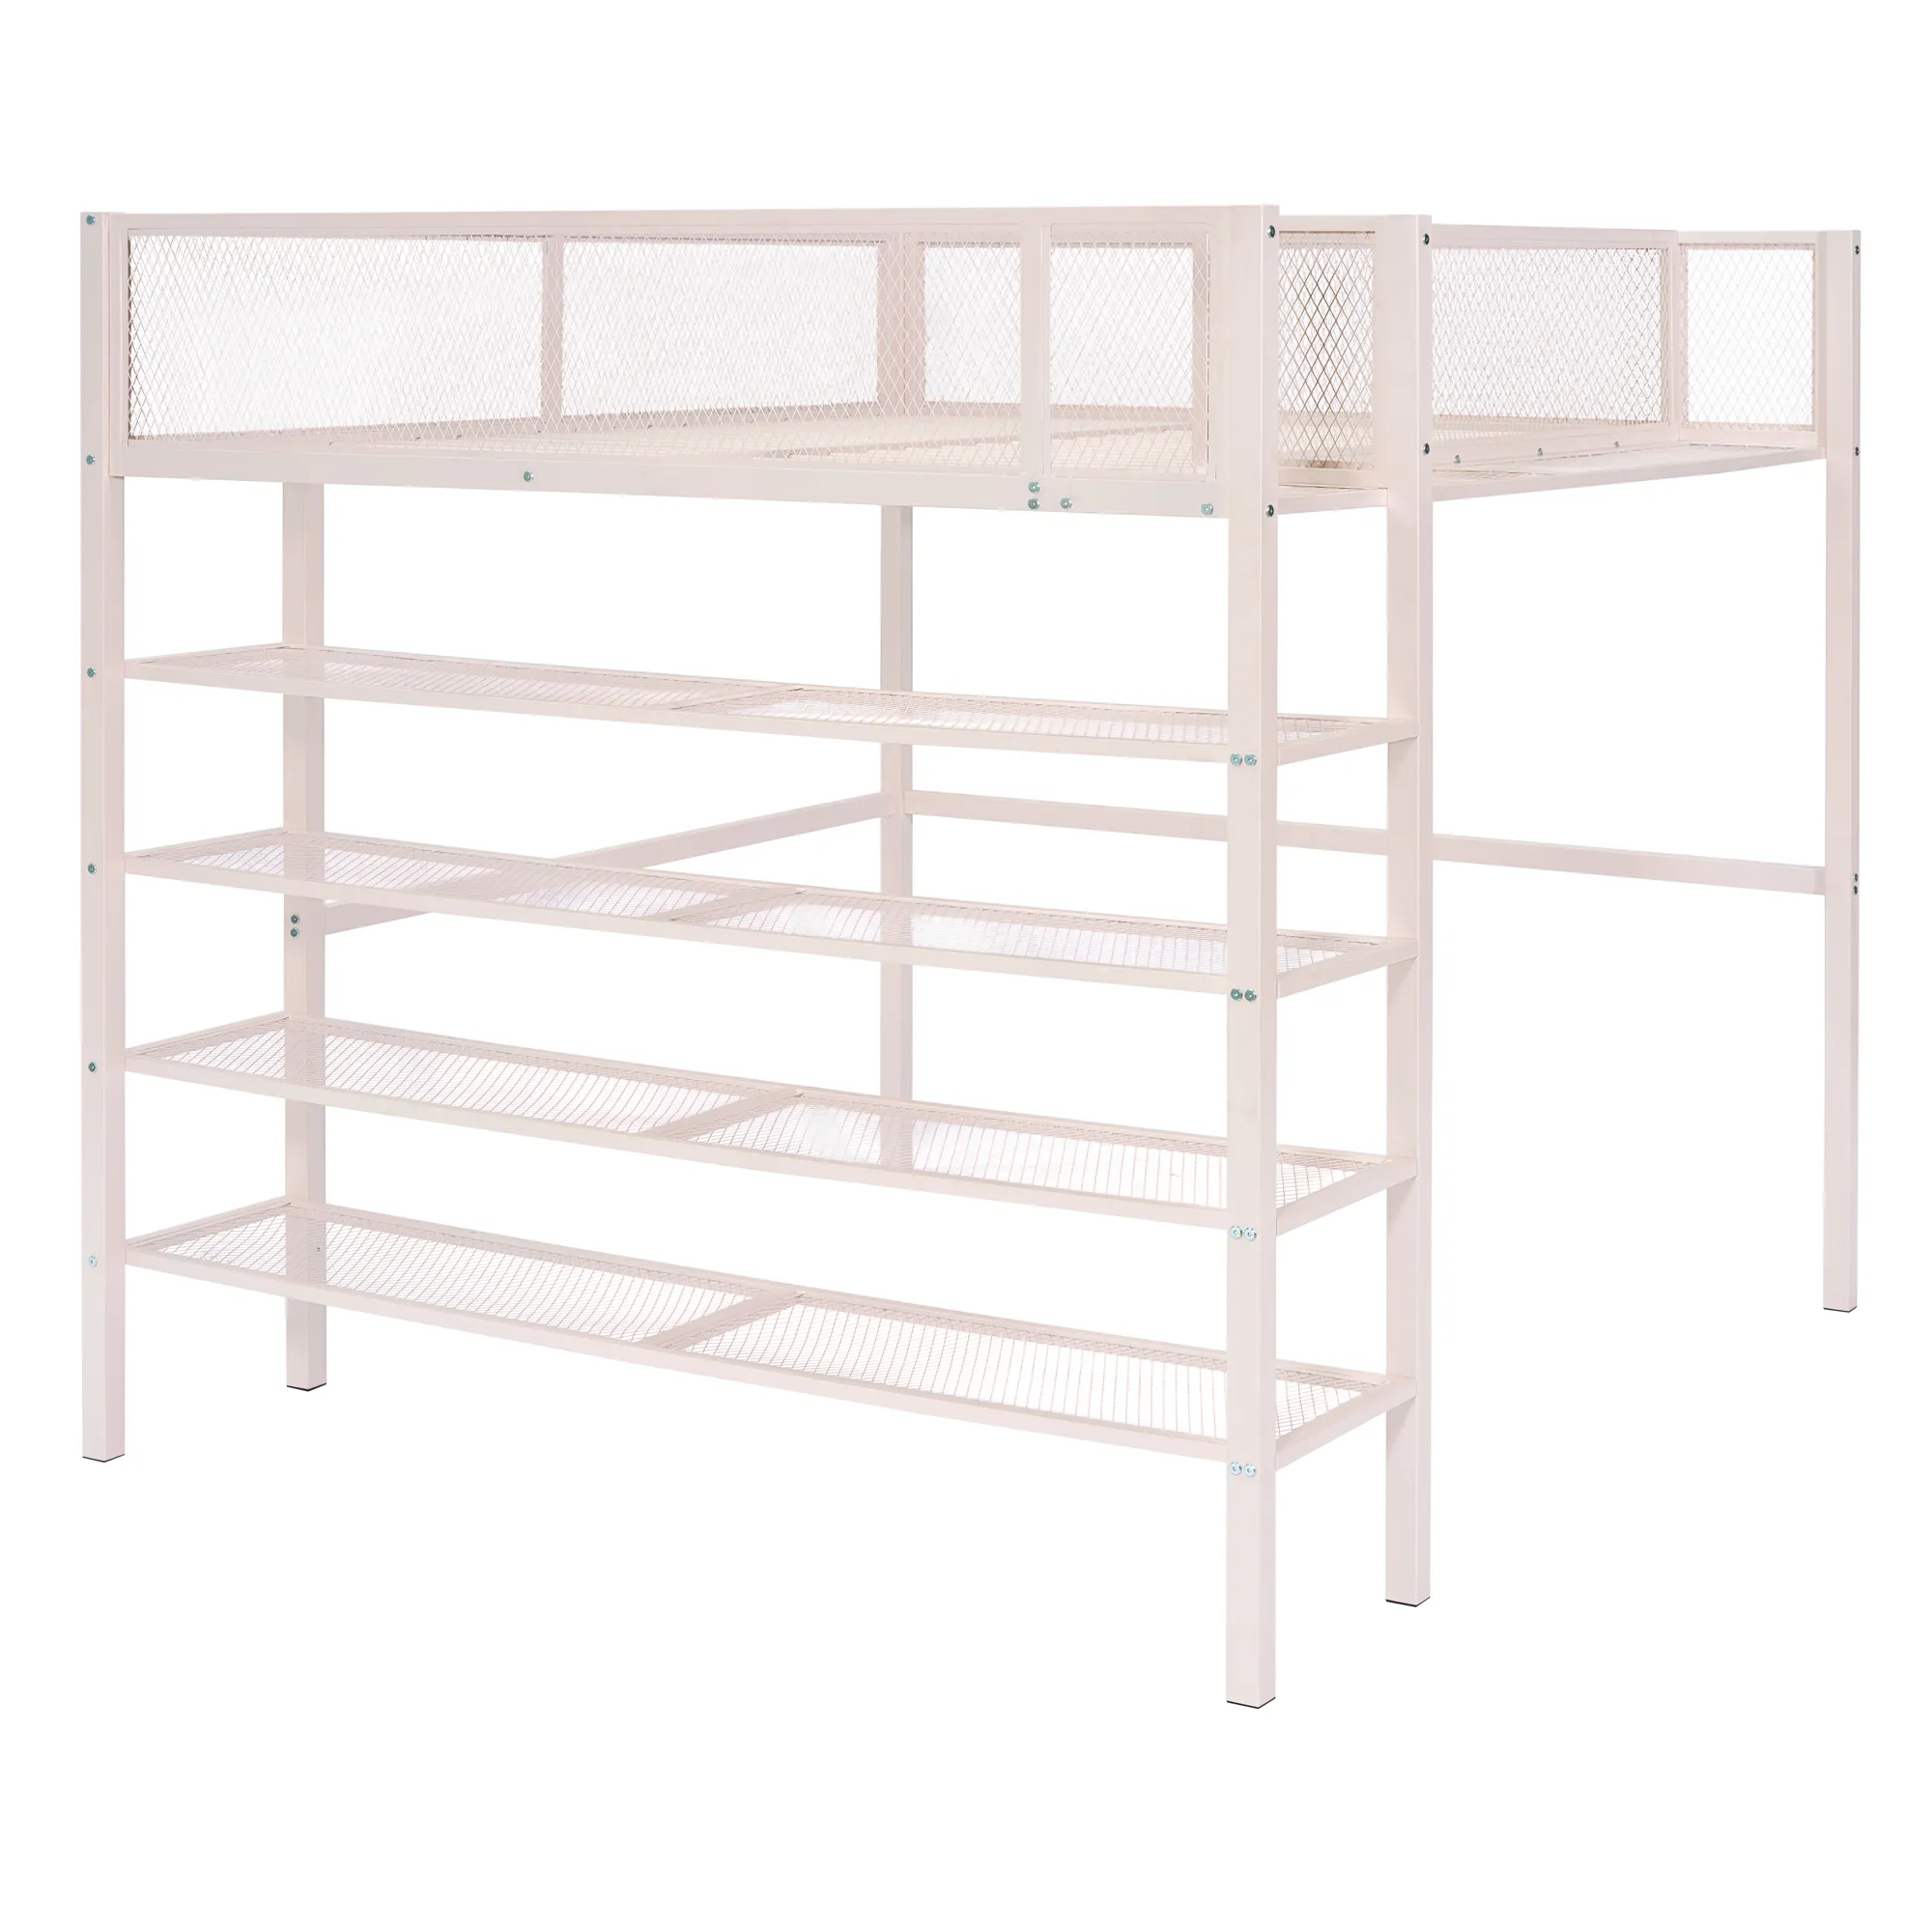 Merax Metal Loft Bed with Storage Shelves